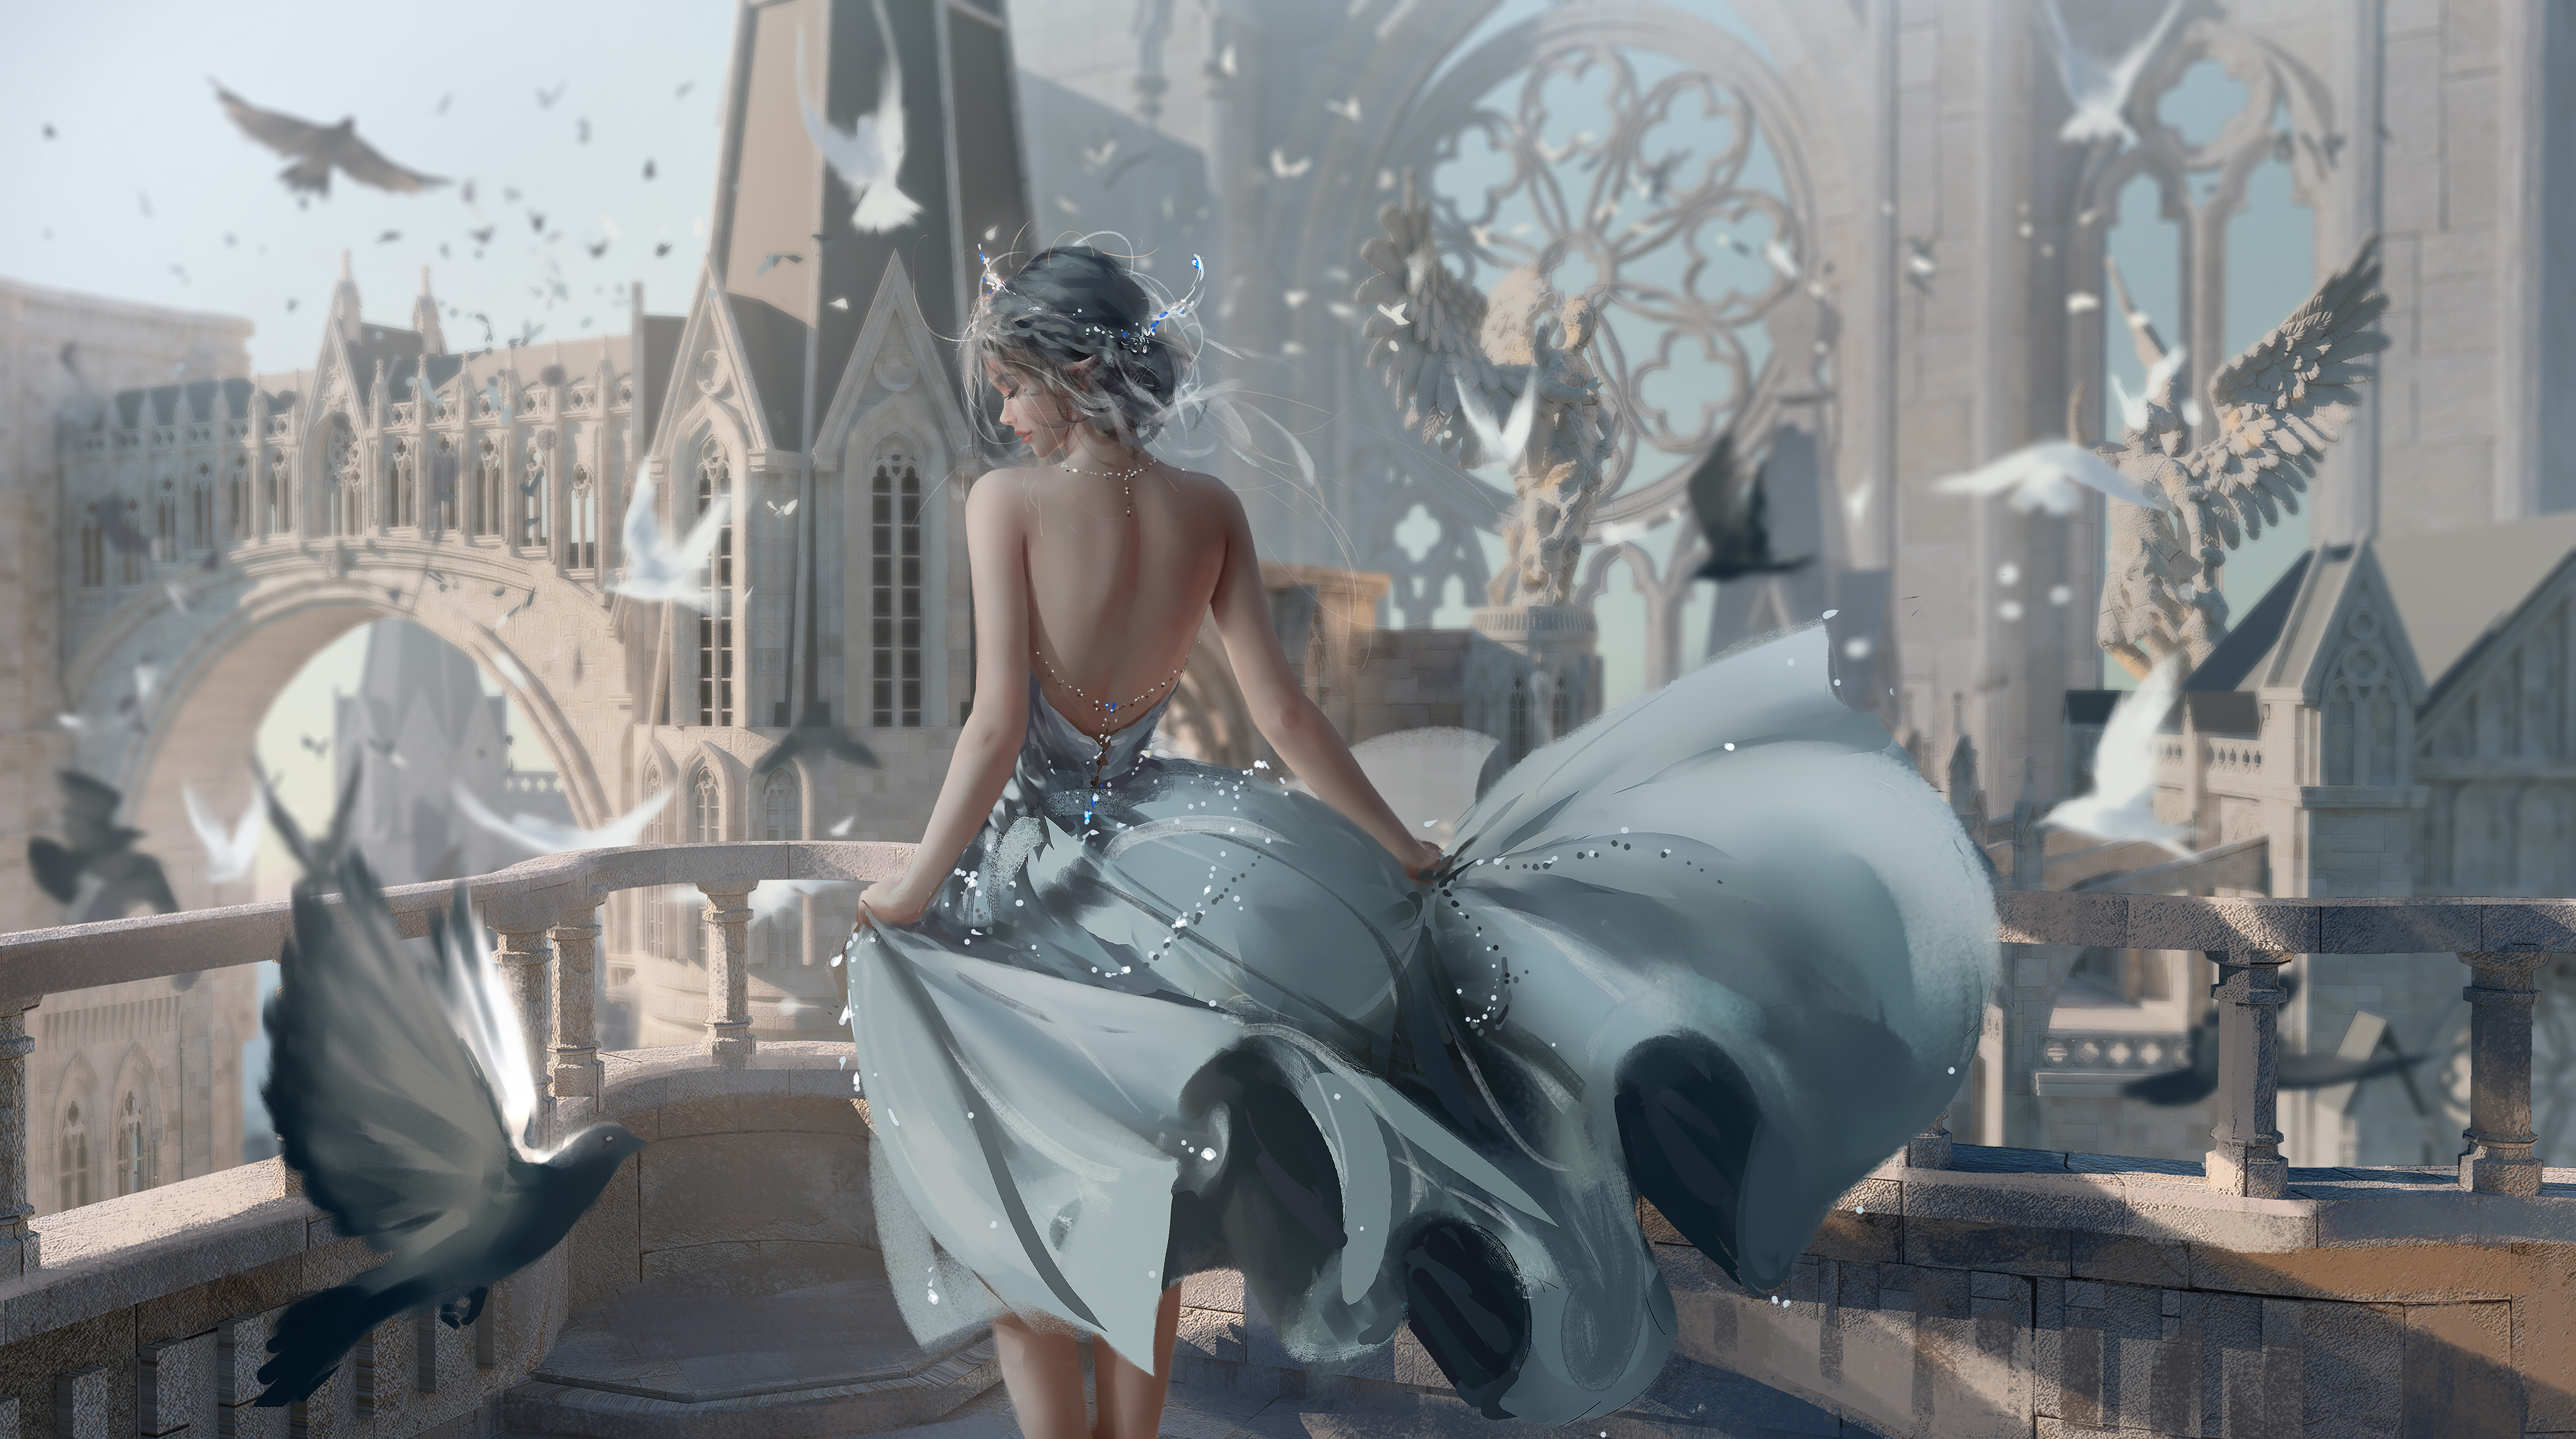 Anime 4240x2369 WLOP digital art fantasy girl princess fantasy architecture Ghostblade